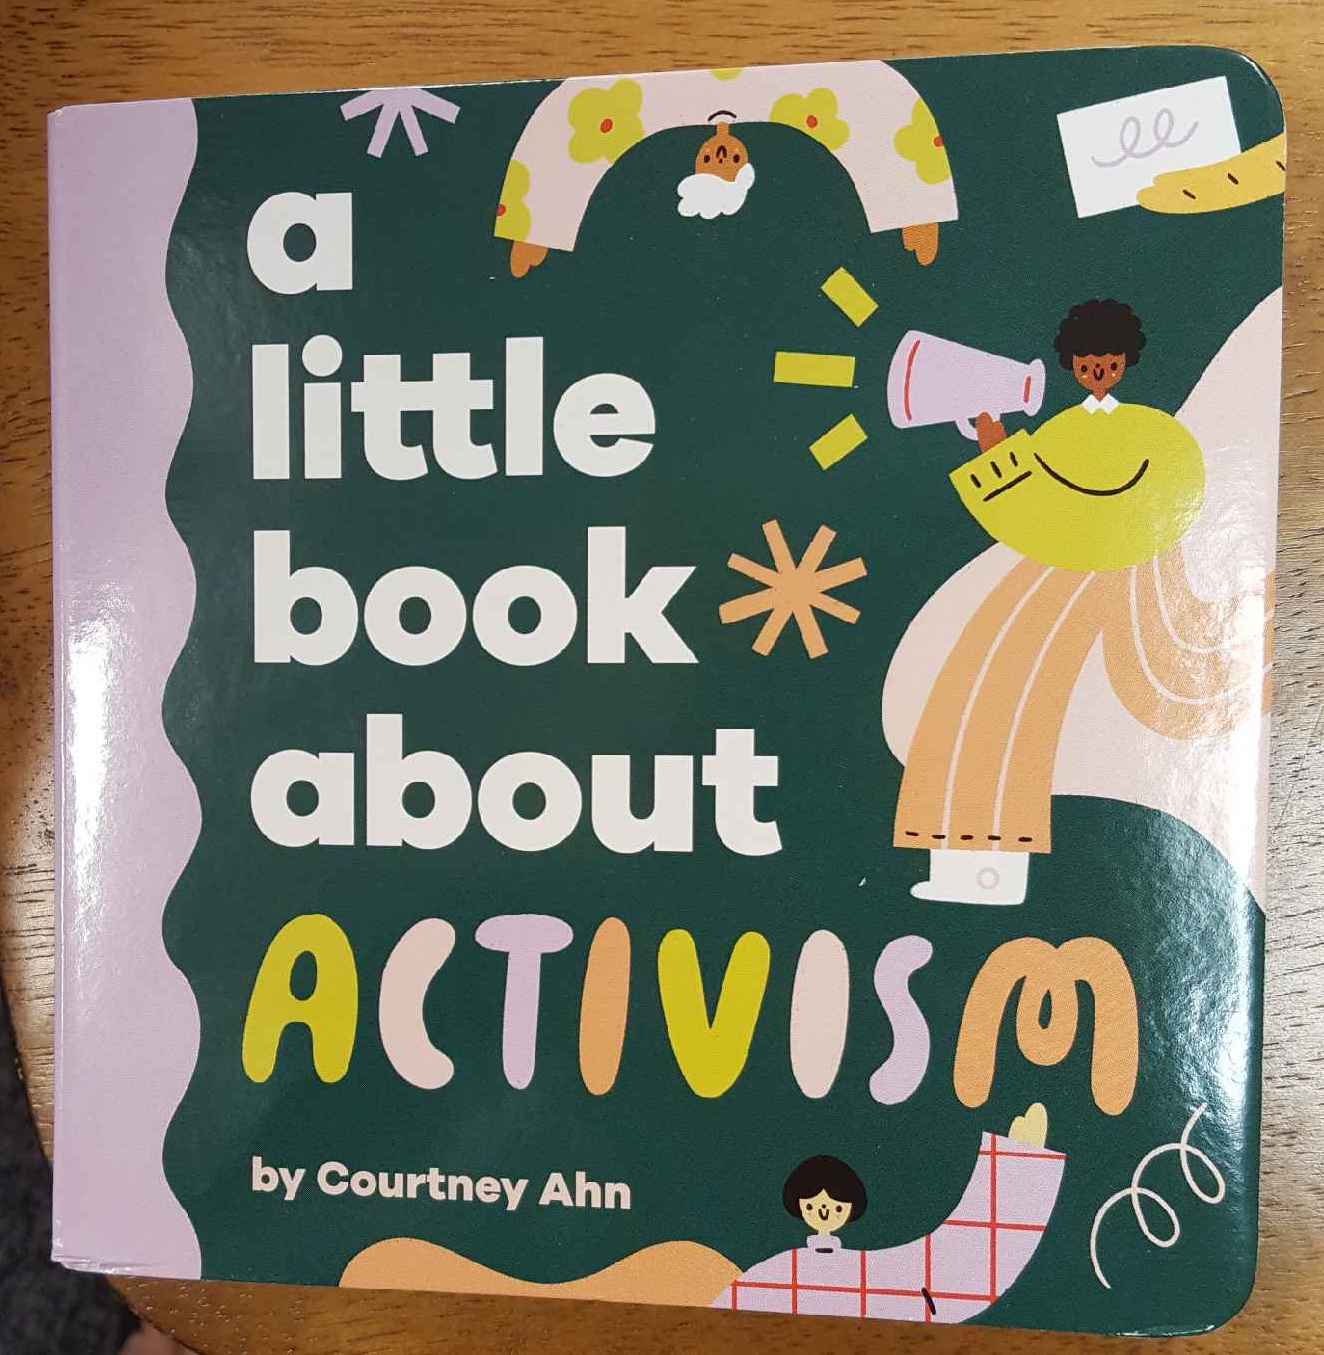 Books: A Little Book About Activism